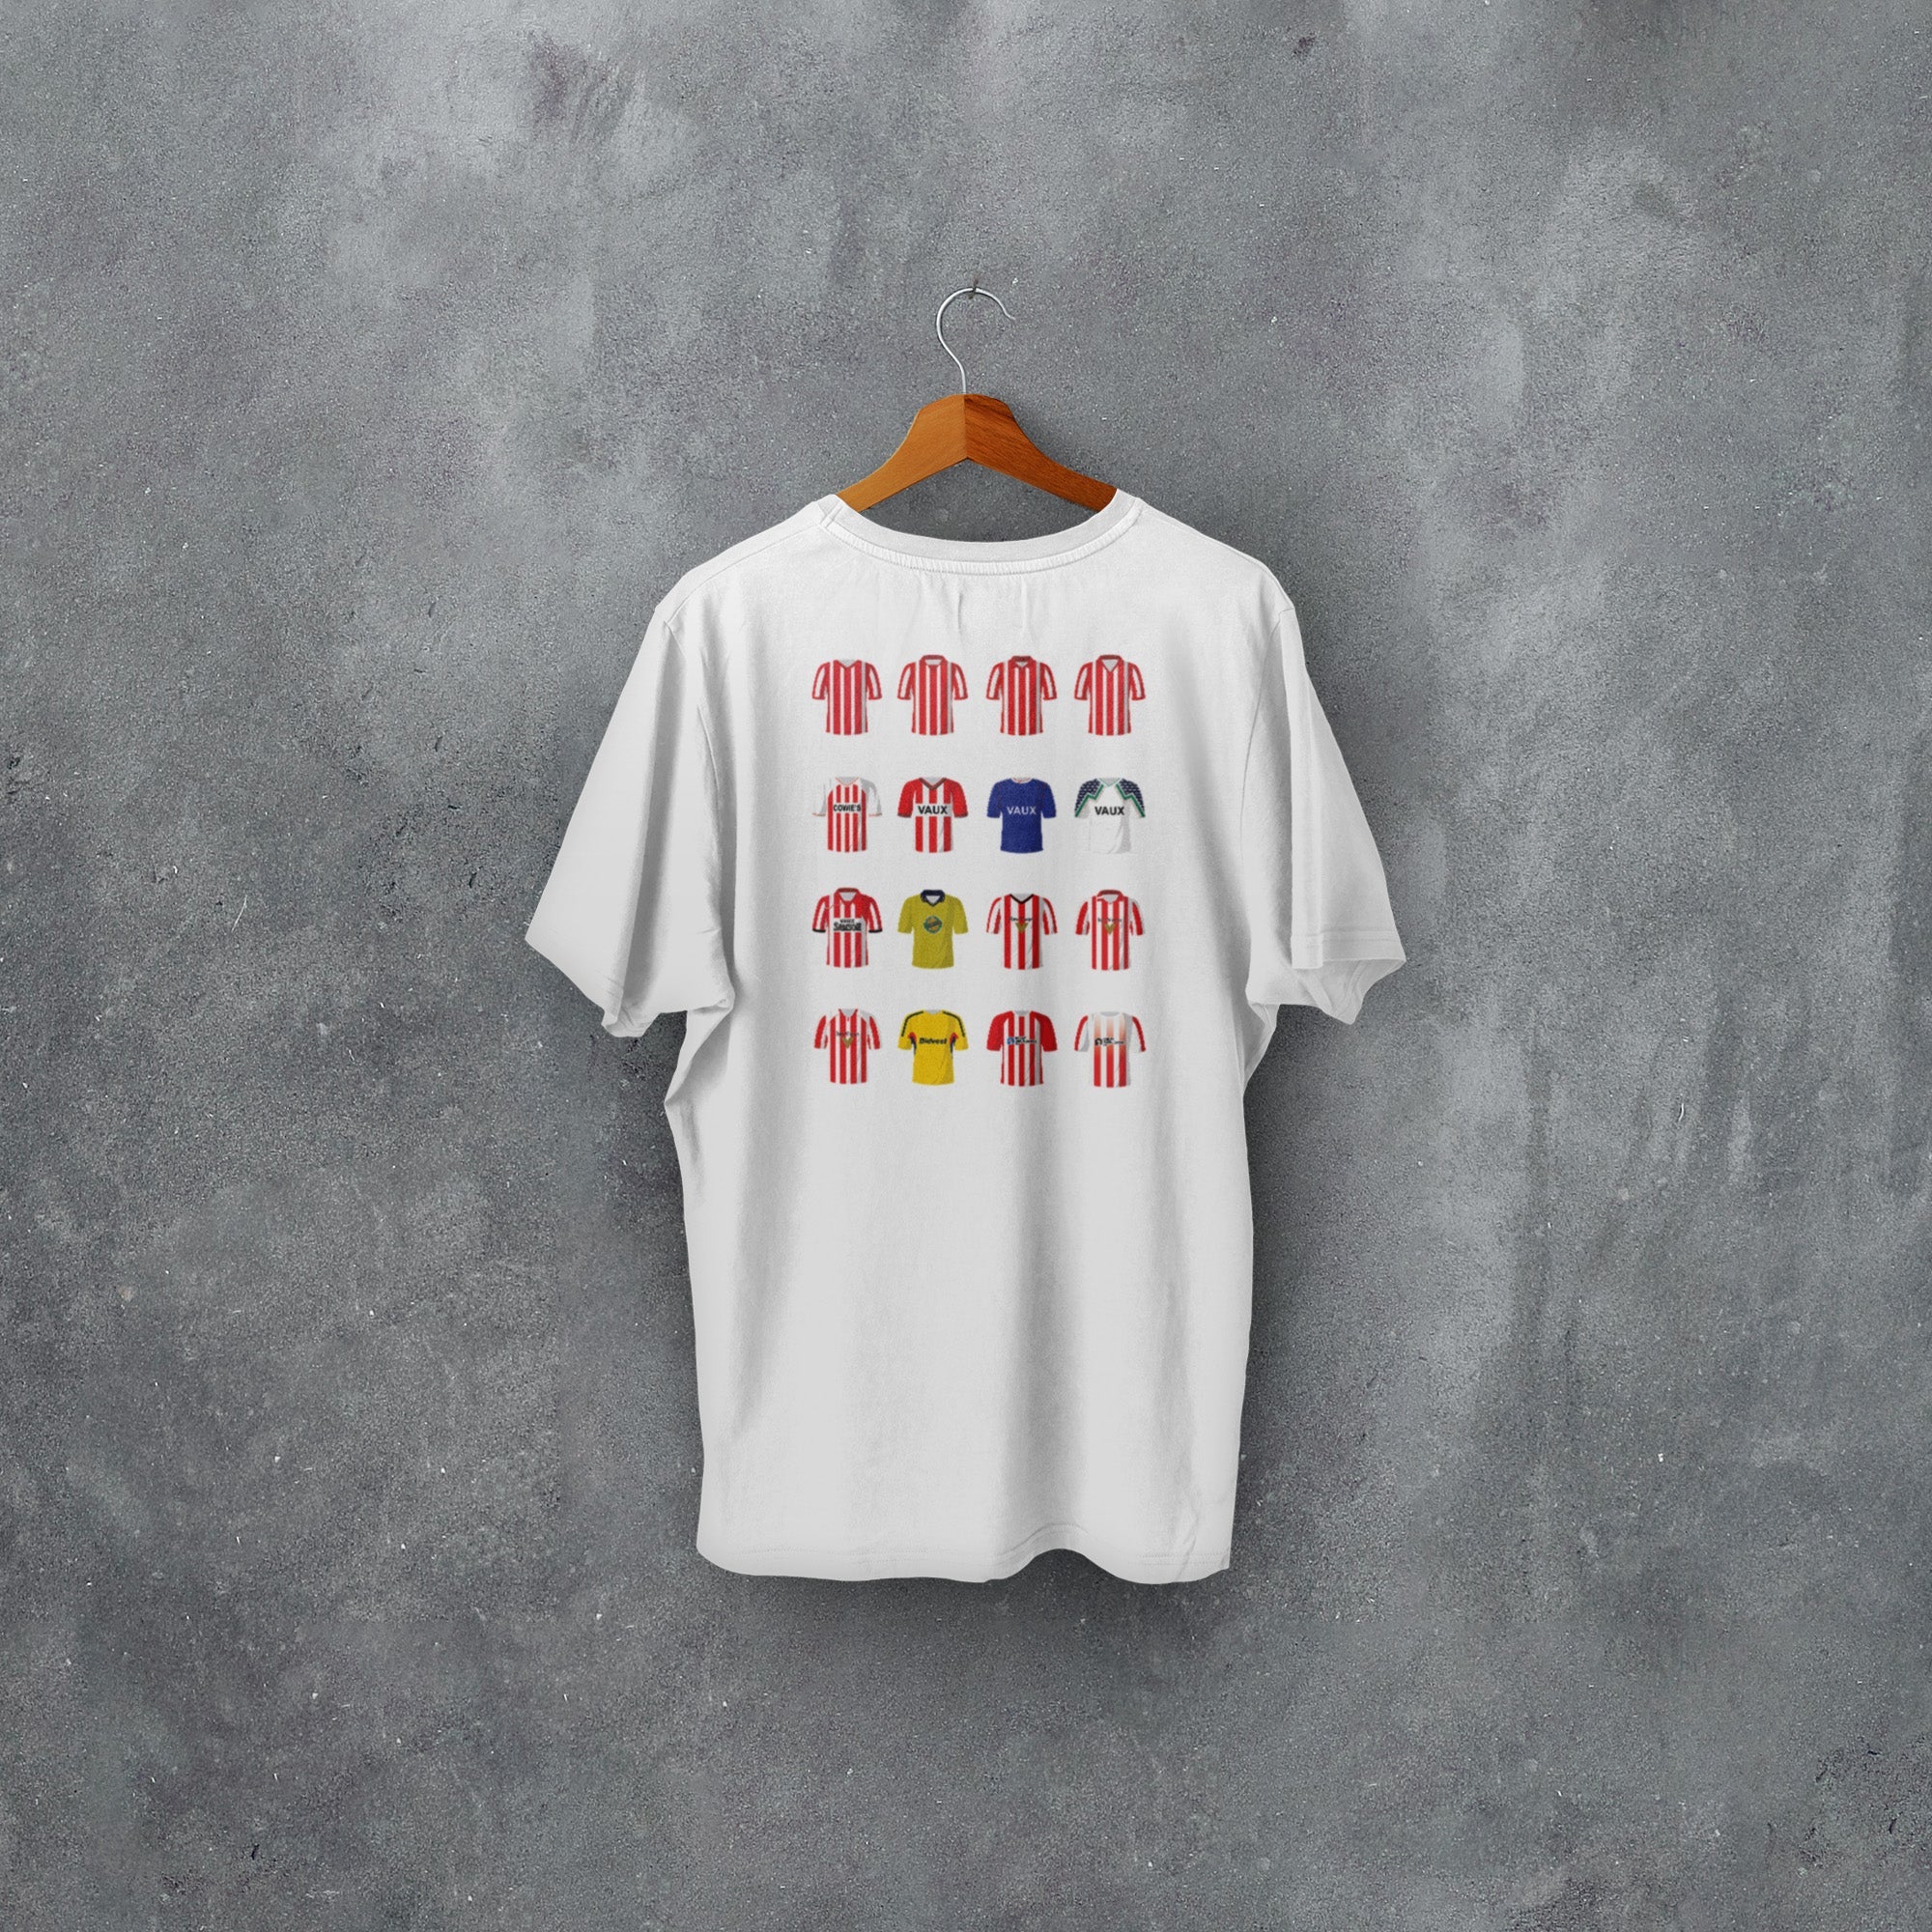 Sunderland Classic Kits Football T-Shirt